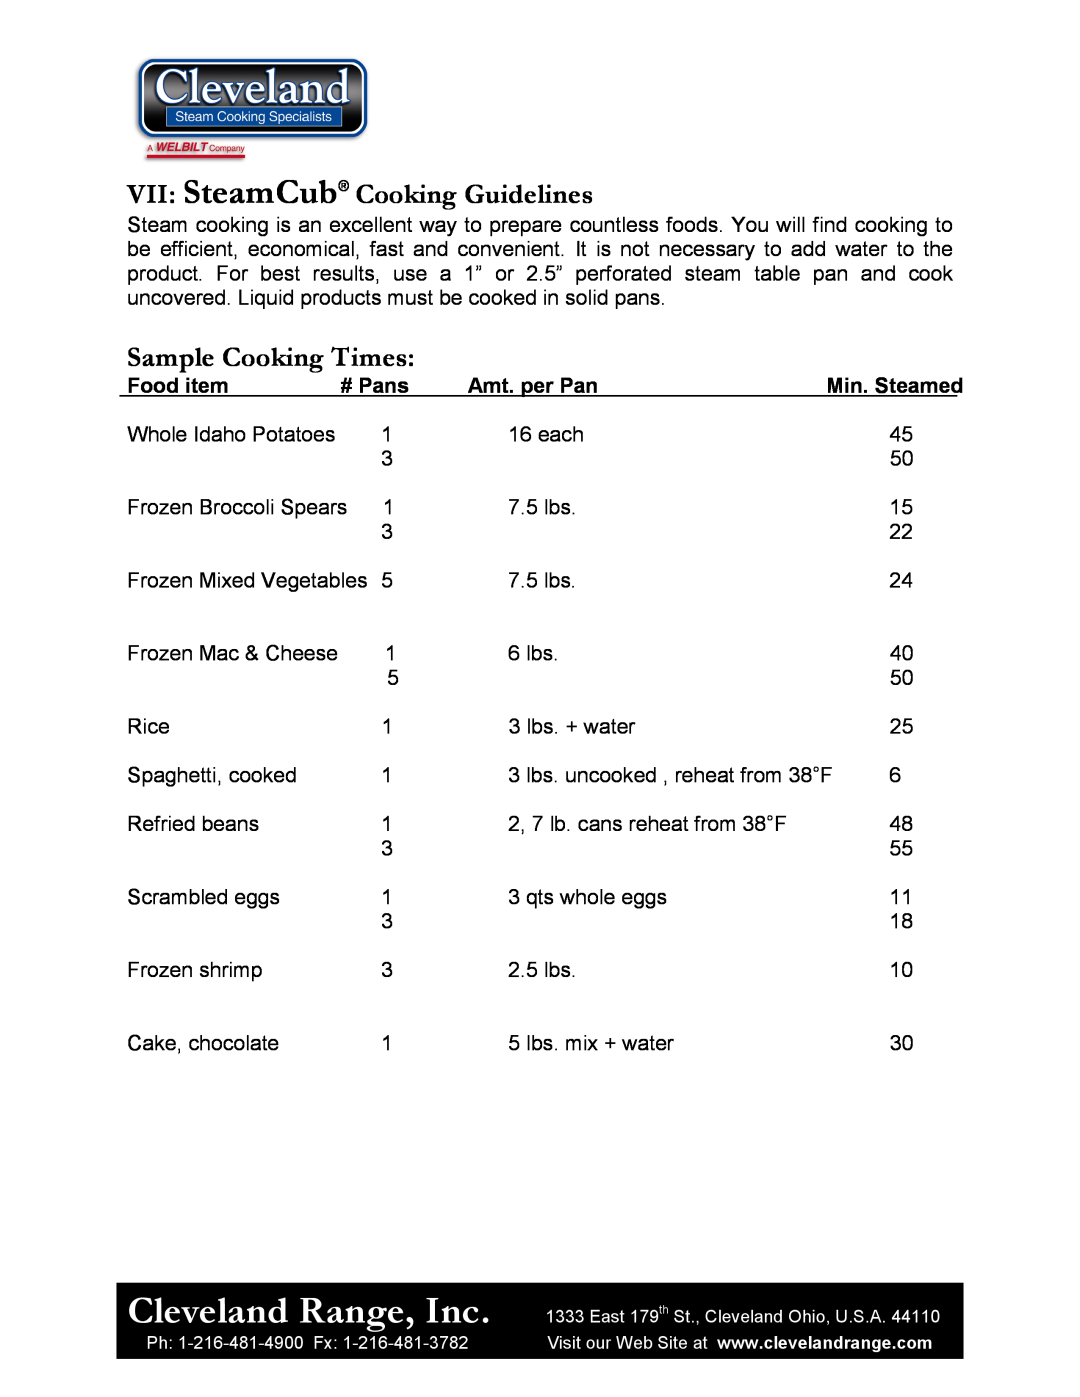 Cleveland Range 1SCE manual Cleveland Range, Inc, VII SteamCub Cooking Guidelines, Sample Cooking Times, Food item, # Pans 